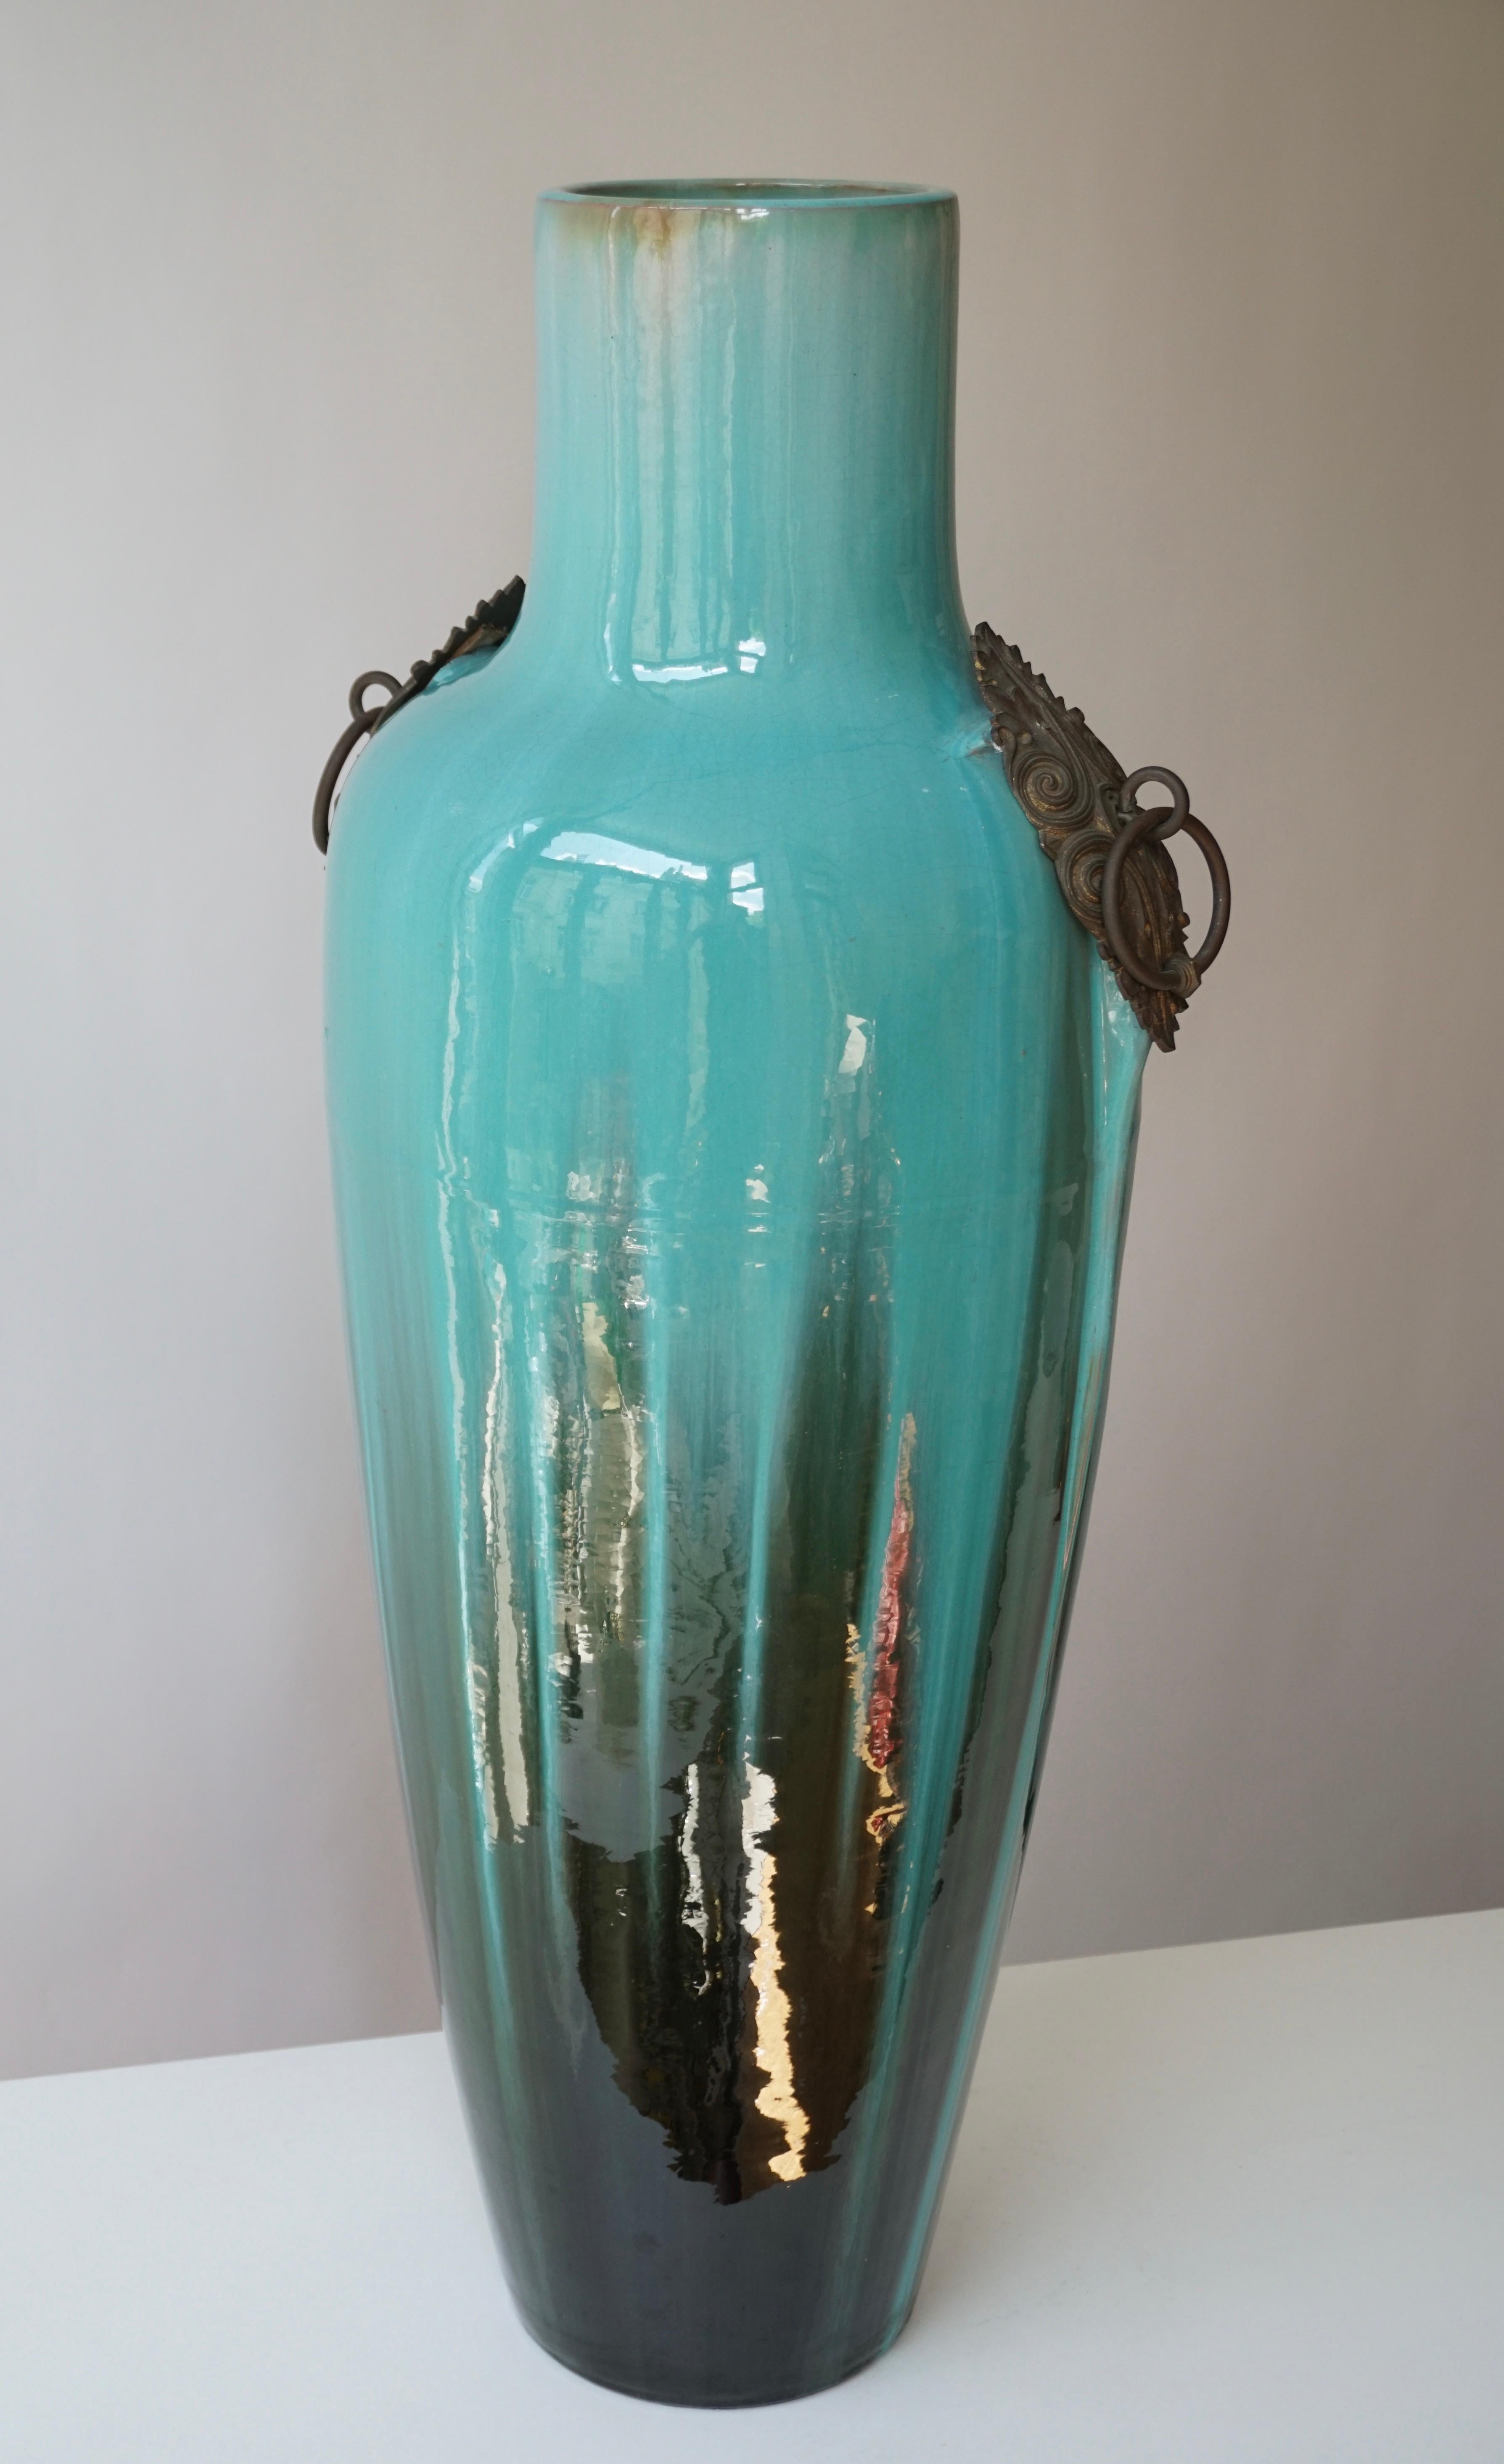 Large glazed vase by Clement Massier. Impressed maker's mark.
Clement Massier, Juan (AM)
Measures: Height 82 cm, width 35 cm, depth 28 cm.
Weight 12 kg.
  